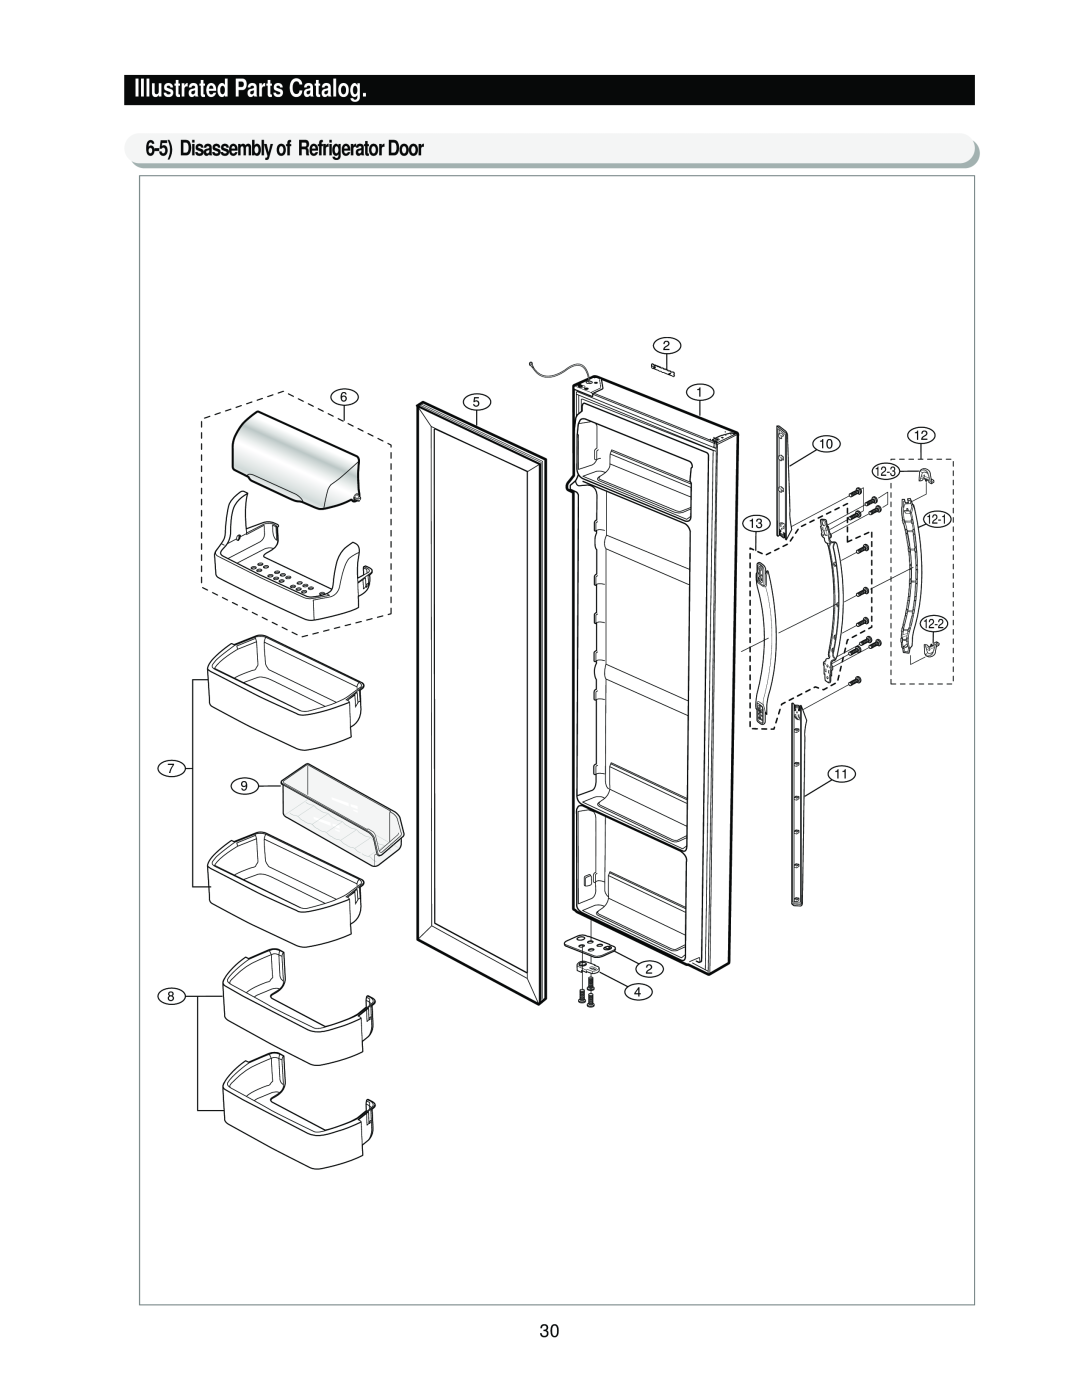 Samsung RS2*3* manual 6-5Disassembly of Refrigerator Door, Illustrated Parts Catalog 